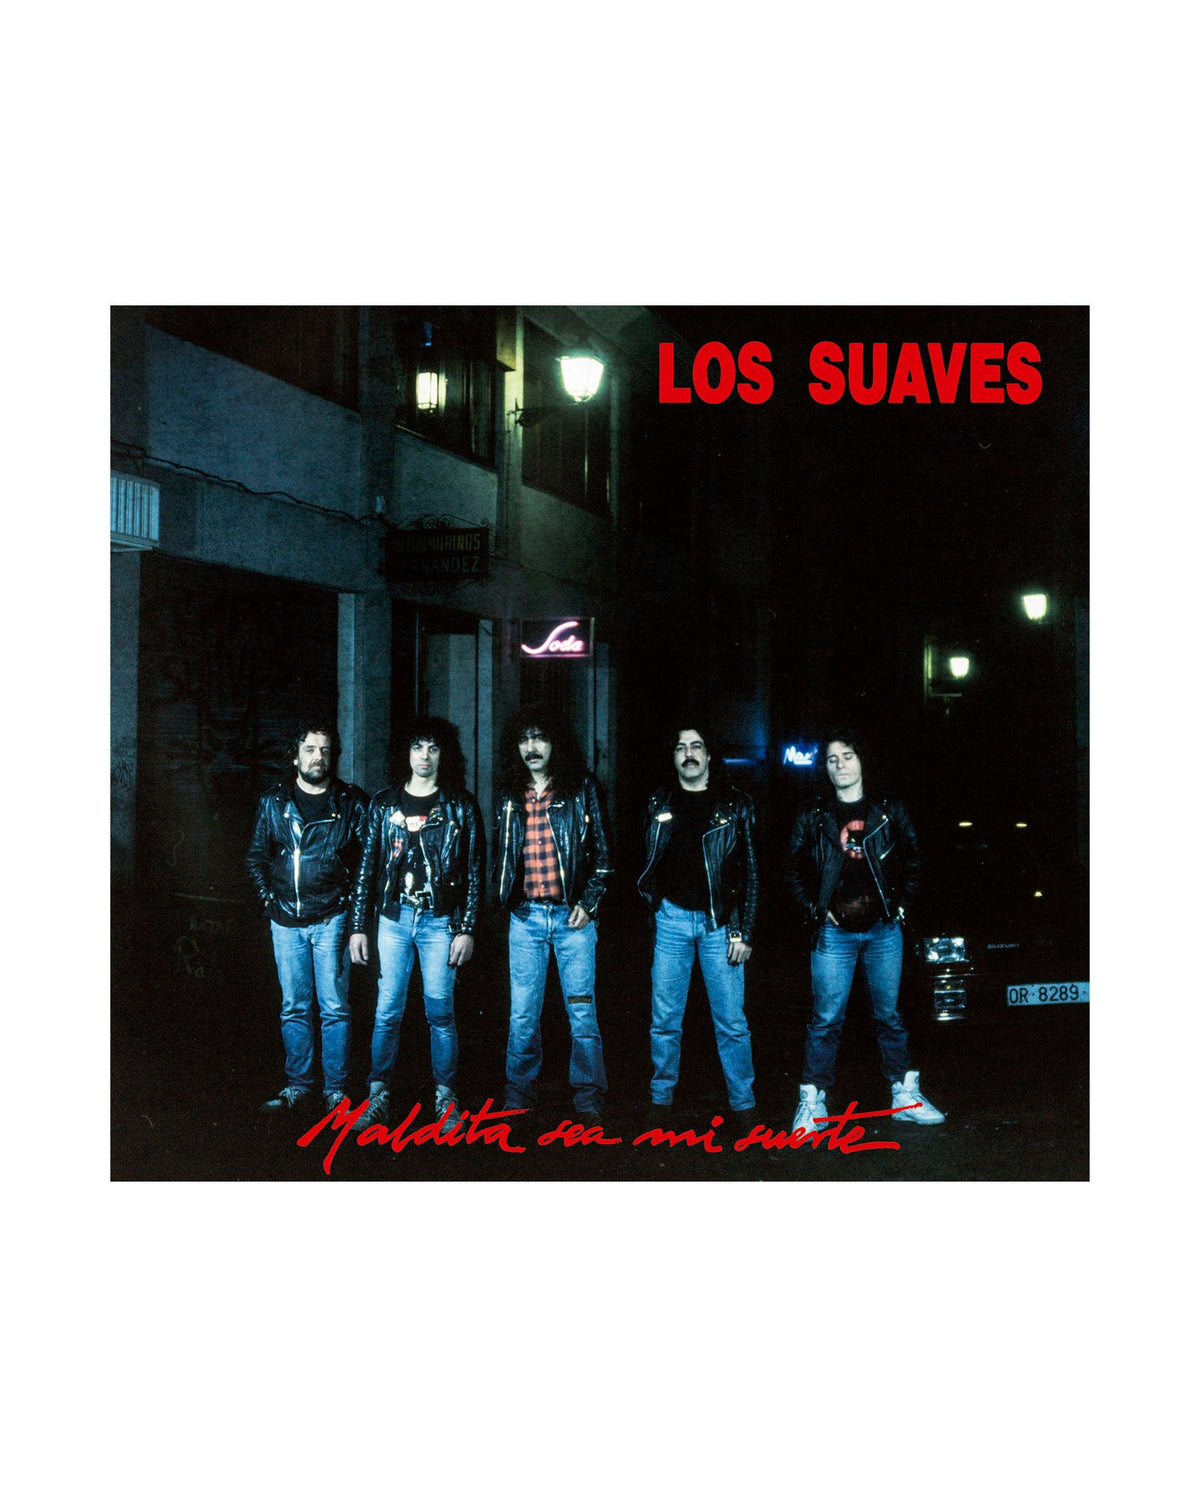 Los Suaves - CD "Maldita sea mi suerte" - D2fy · Rocktud - Los Suaves